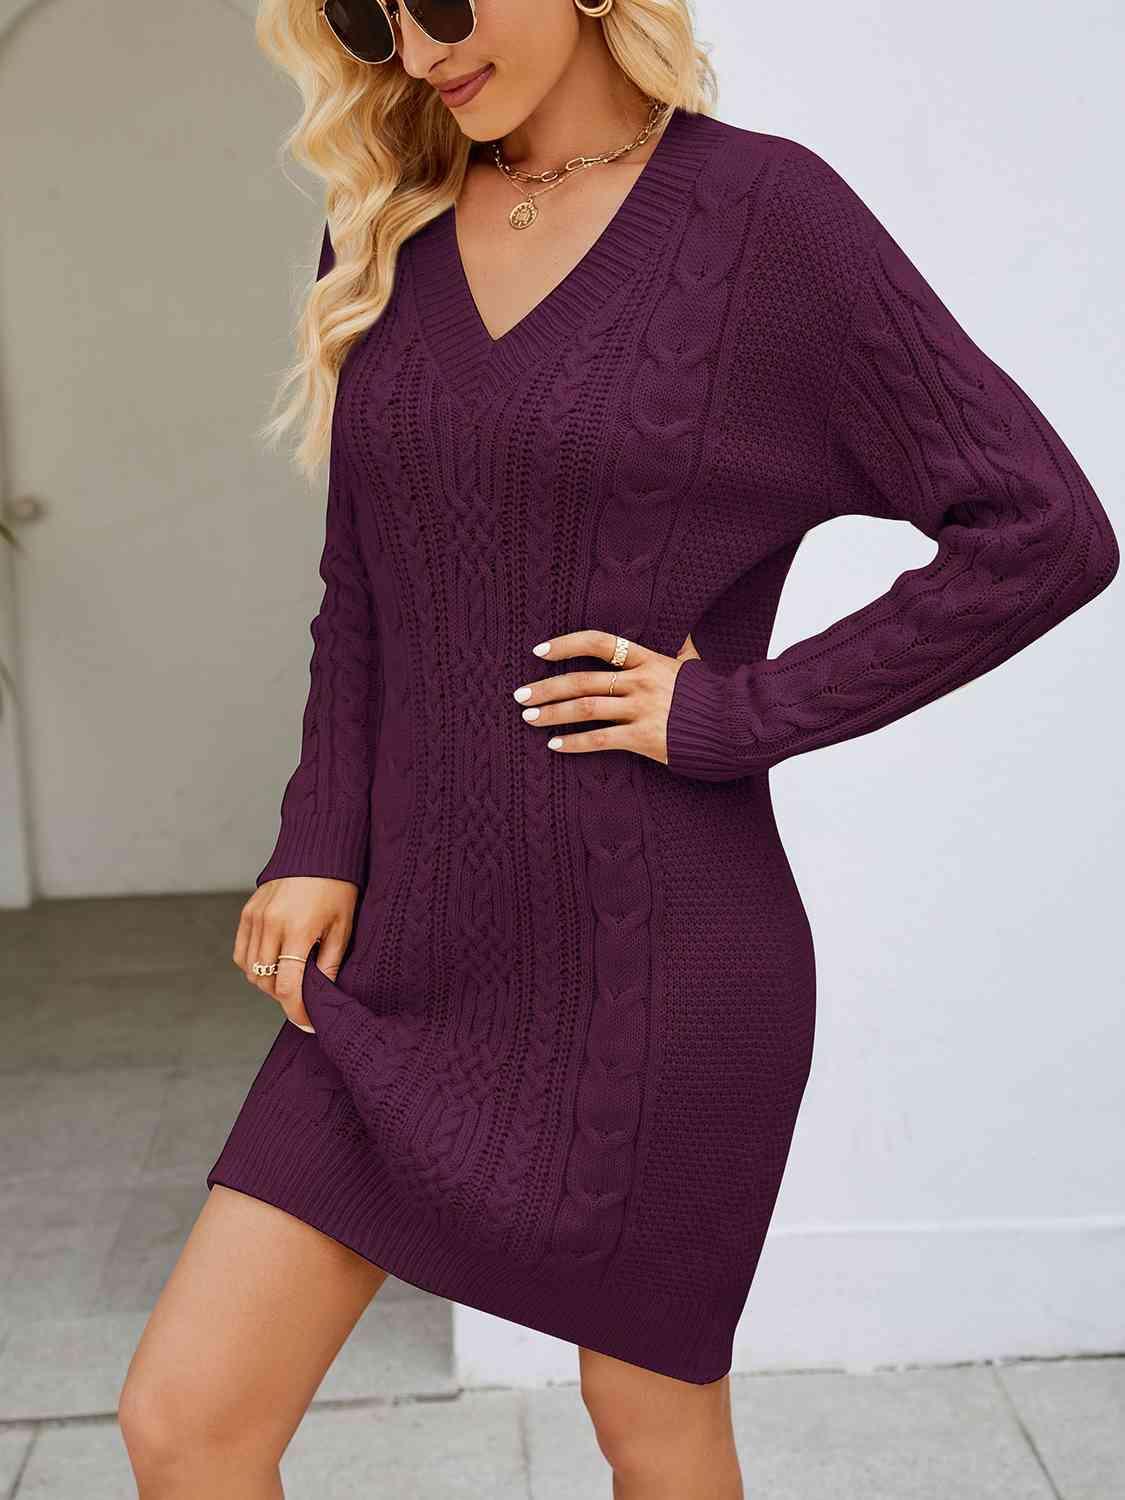 Low Temp Chic V Neck Cable Knit Sweater Dress - MXSTUDIO.COM